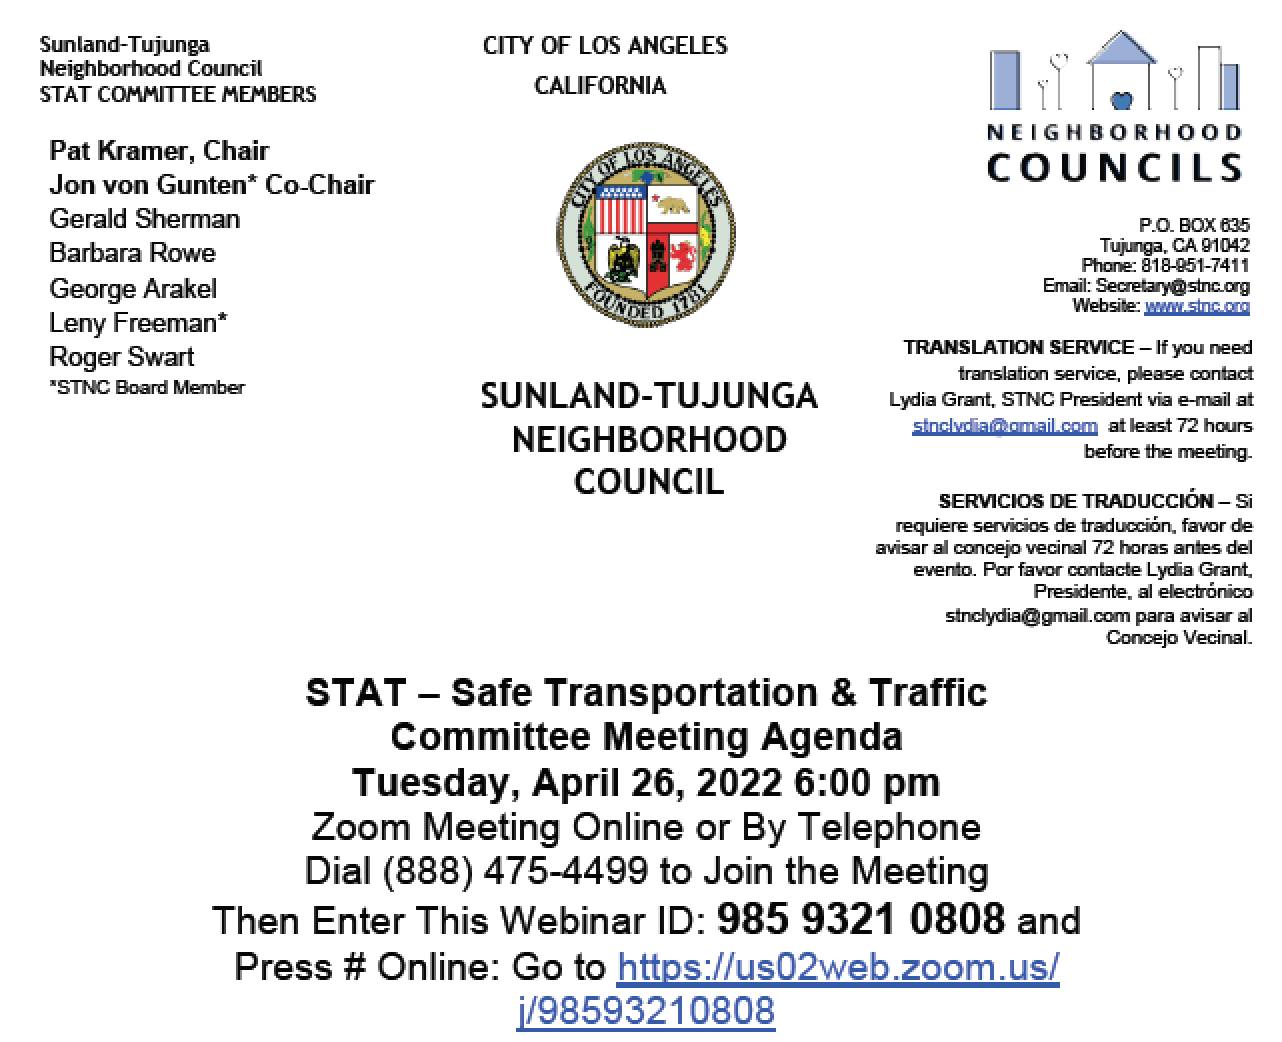 STAT - Safe Transportation & Traffic Committee Meeting